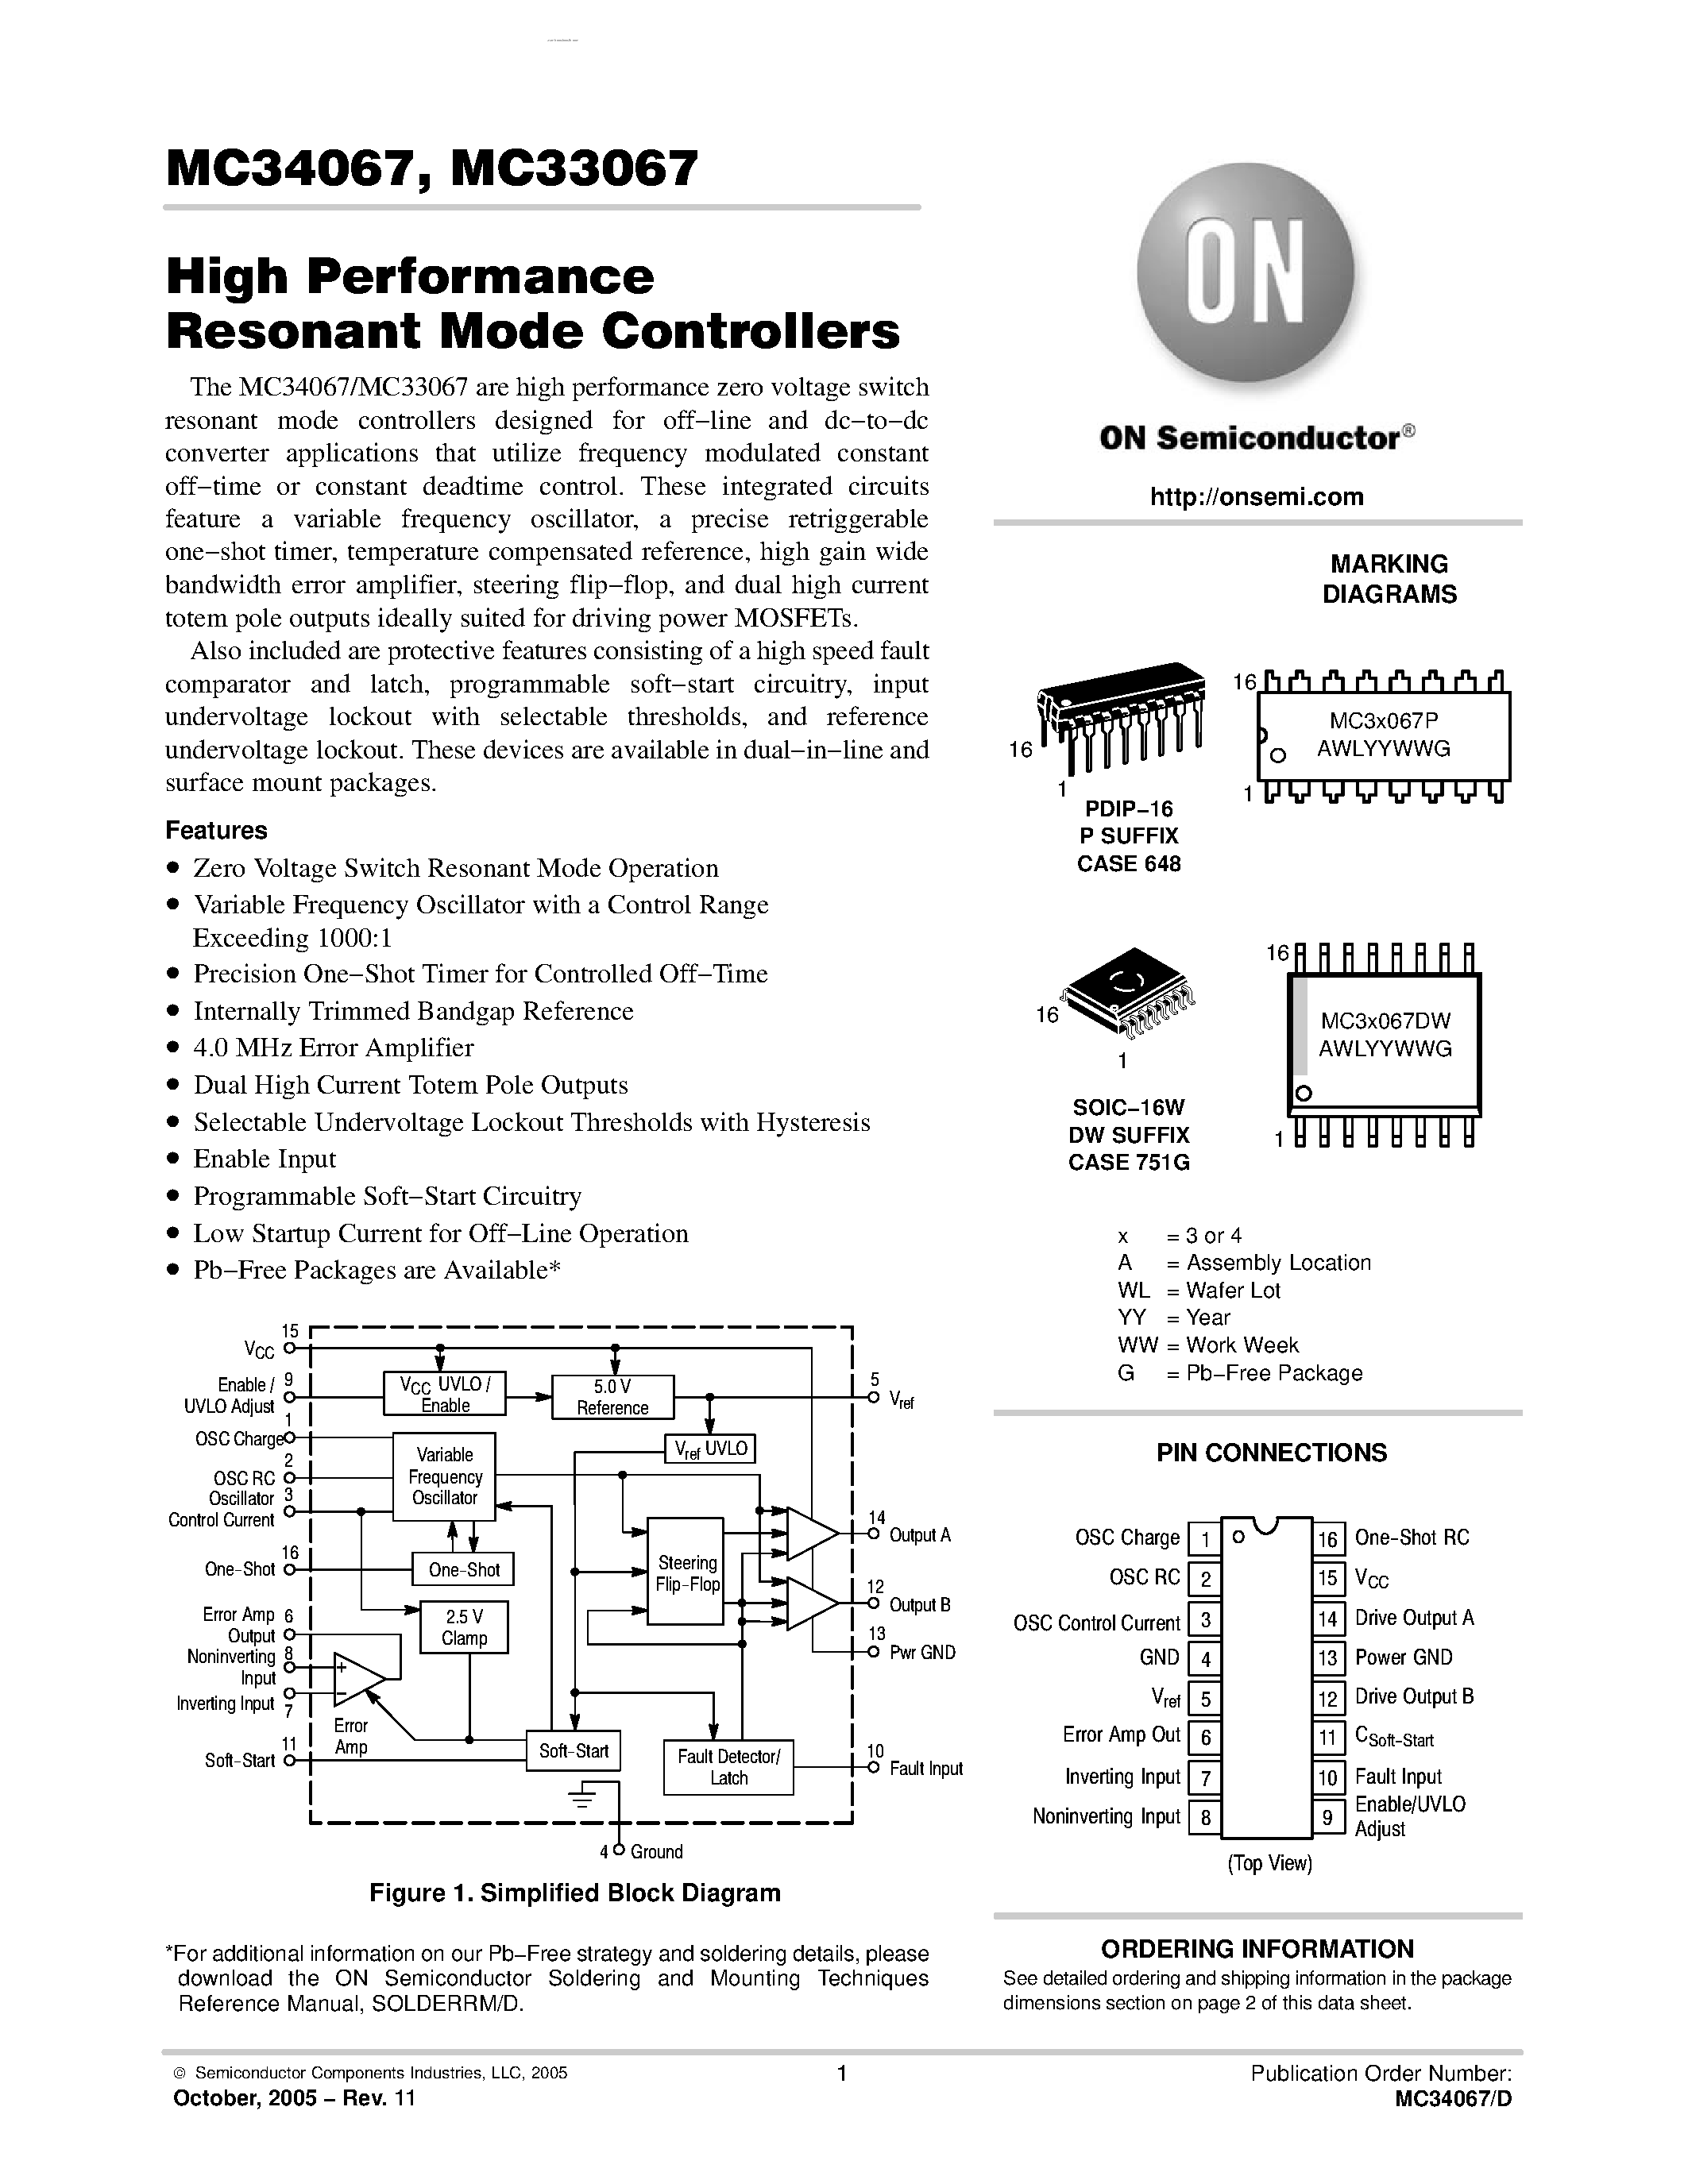 Даташит MC33067 - (MC33067 / MC34067) High Performance Resonant Mode Controllers страница 1